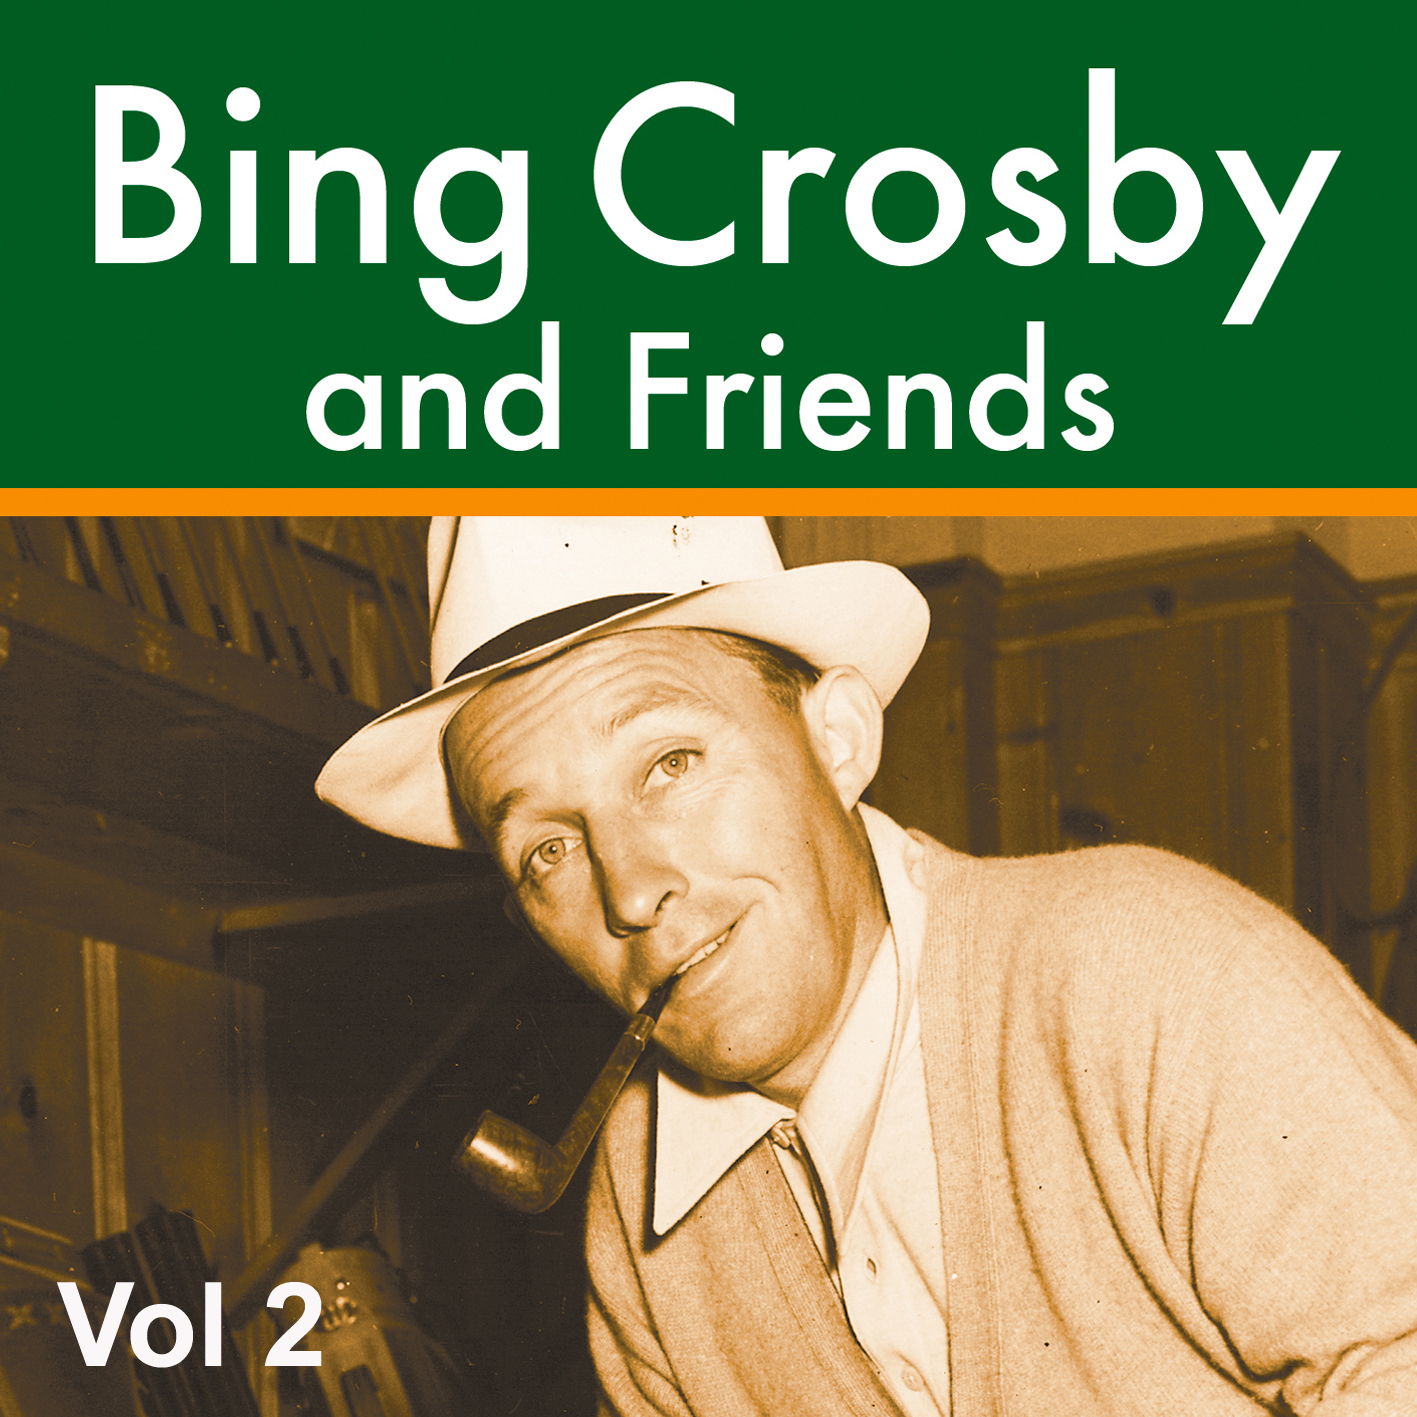 Bing Crosby and Friends Vol 2